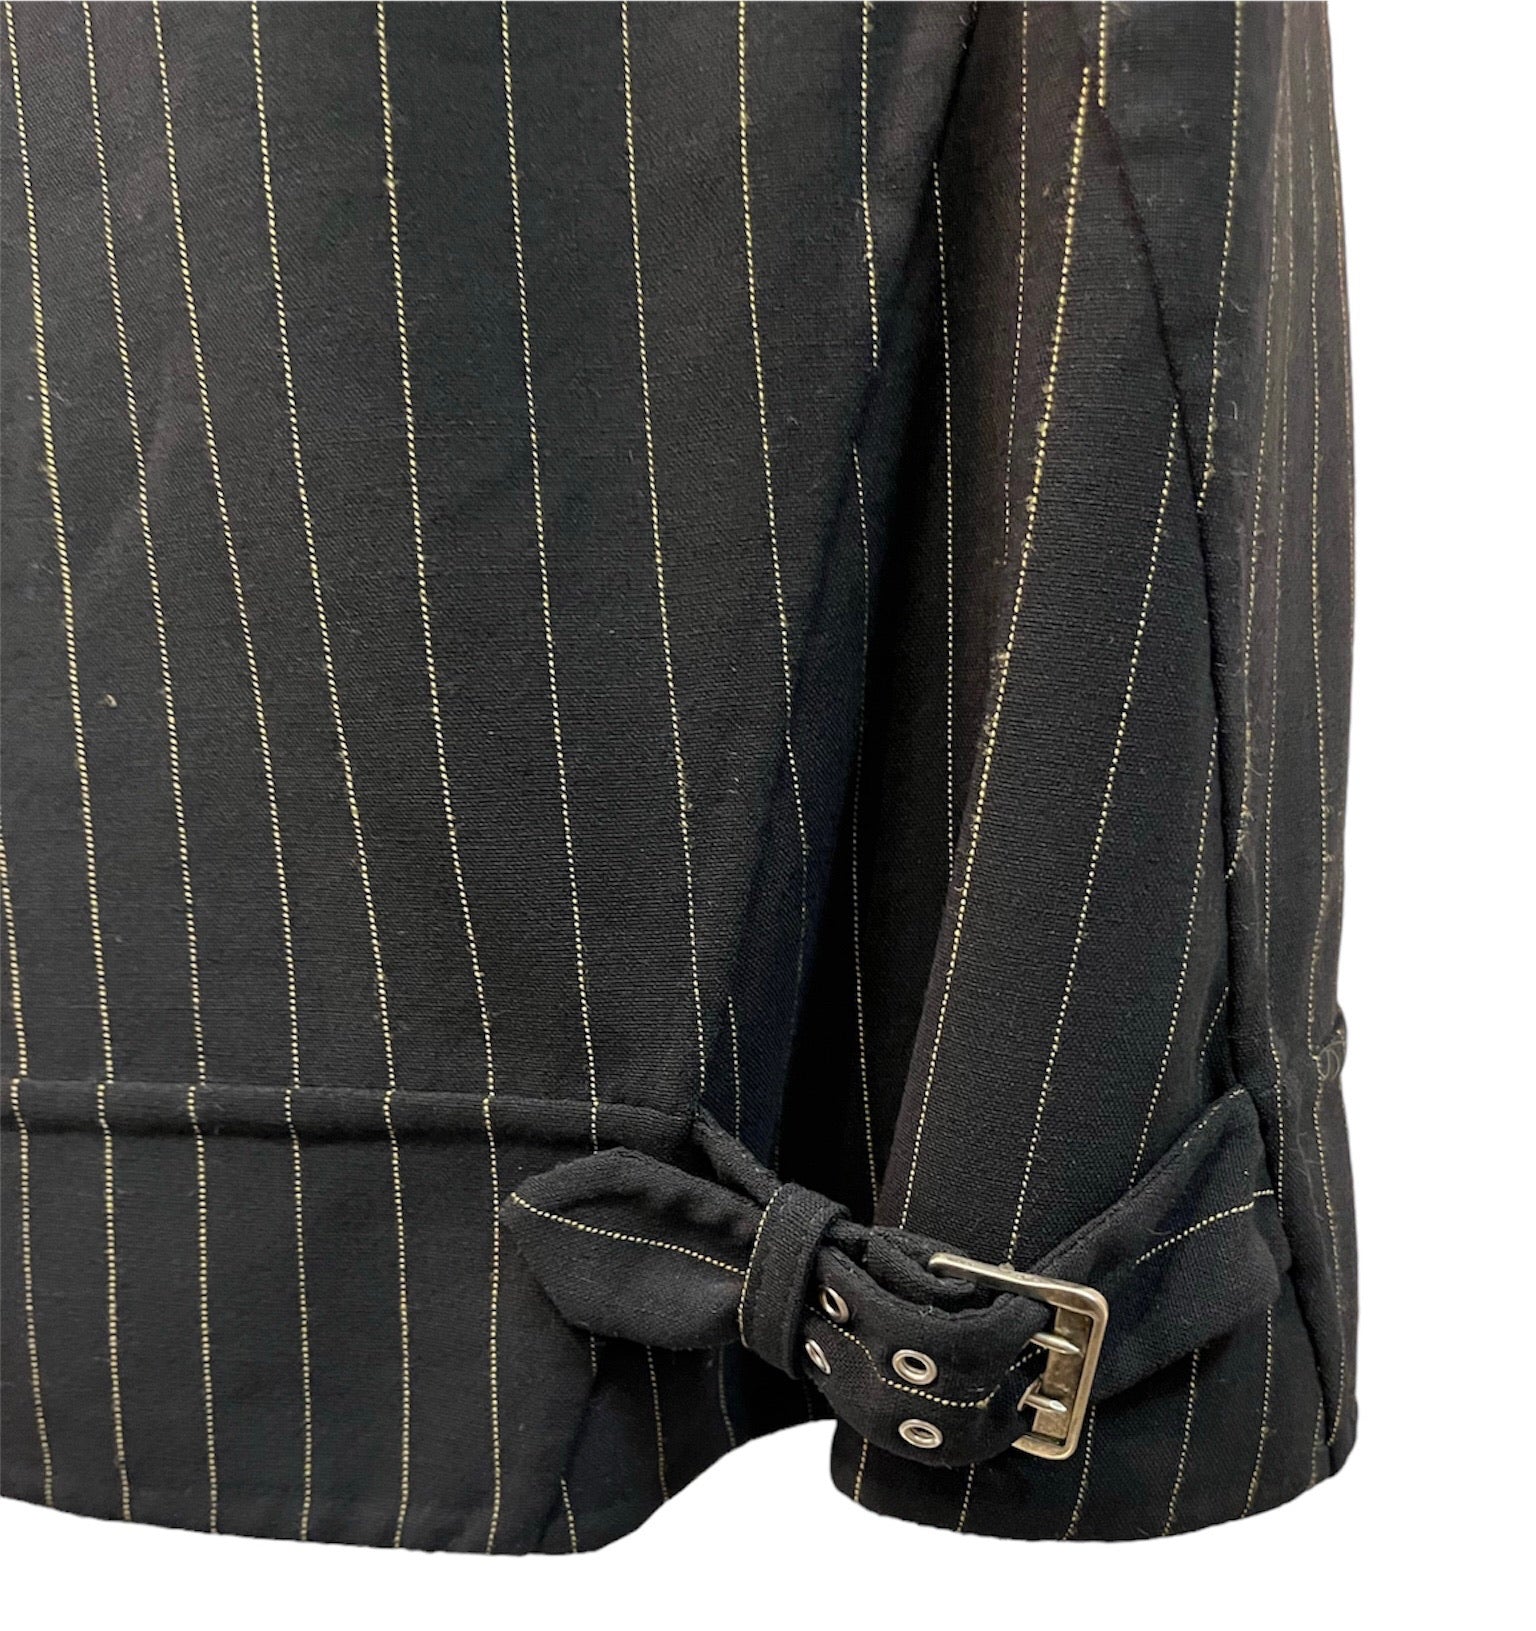  Jean Paul Gaultier 90s Black Pinstripe Skirt with Buckles DETAIL 4 of 5